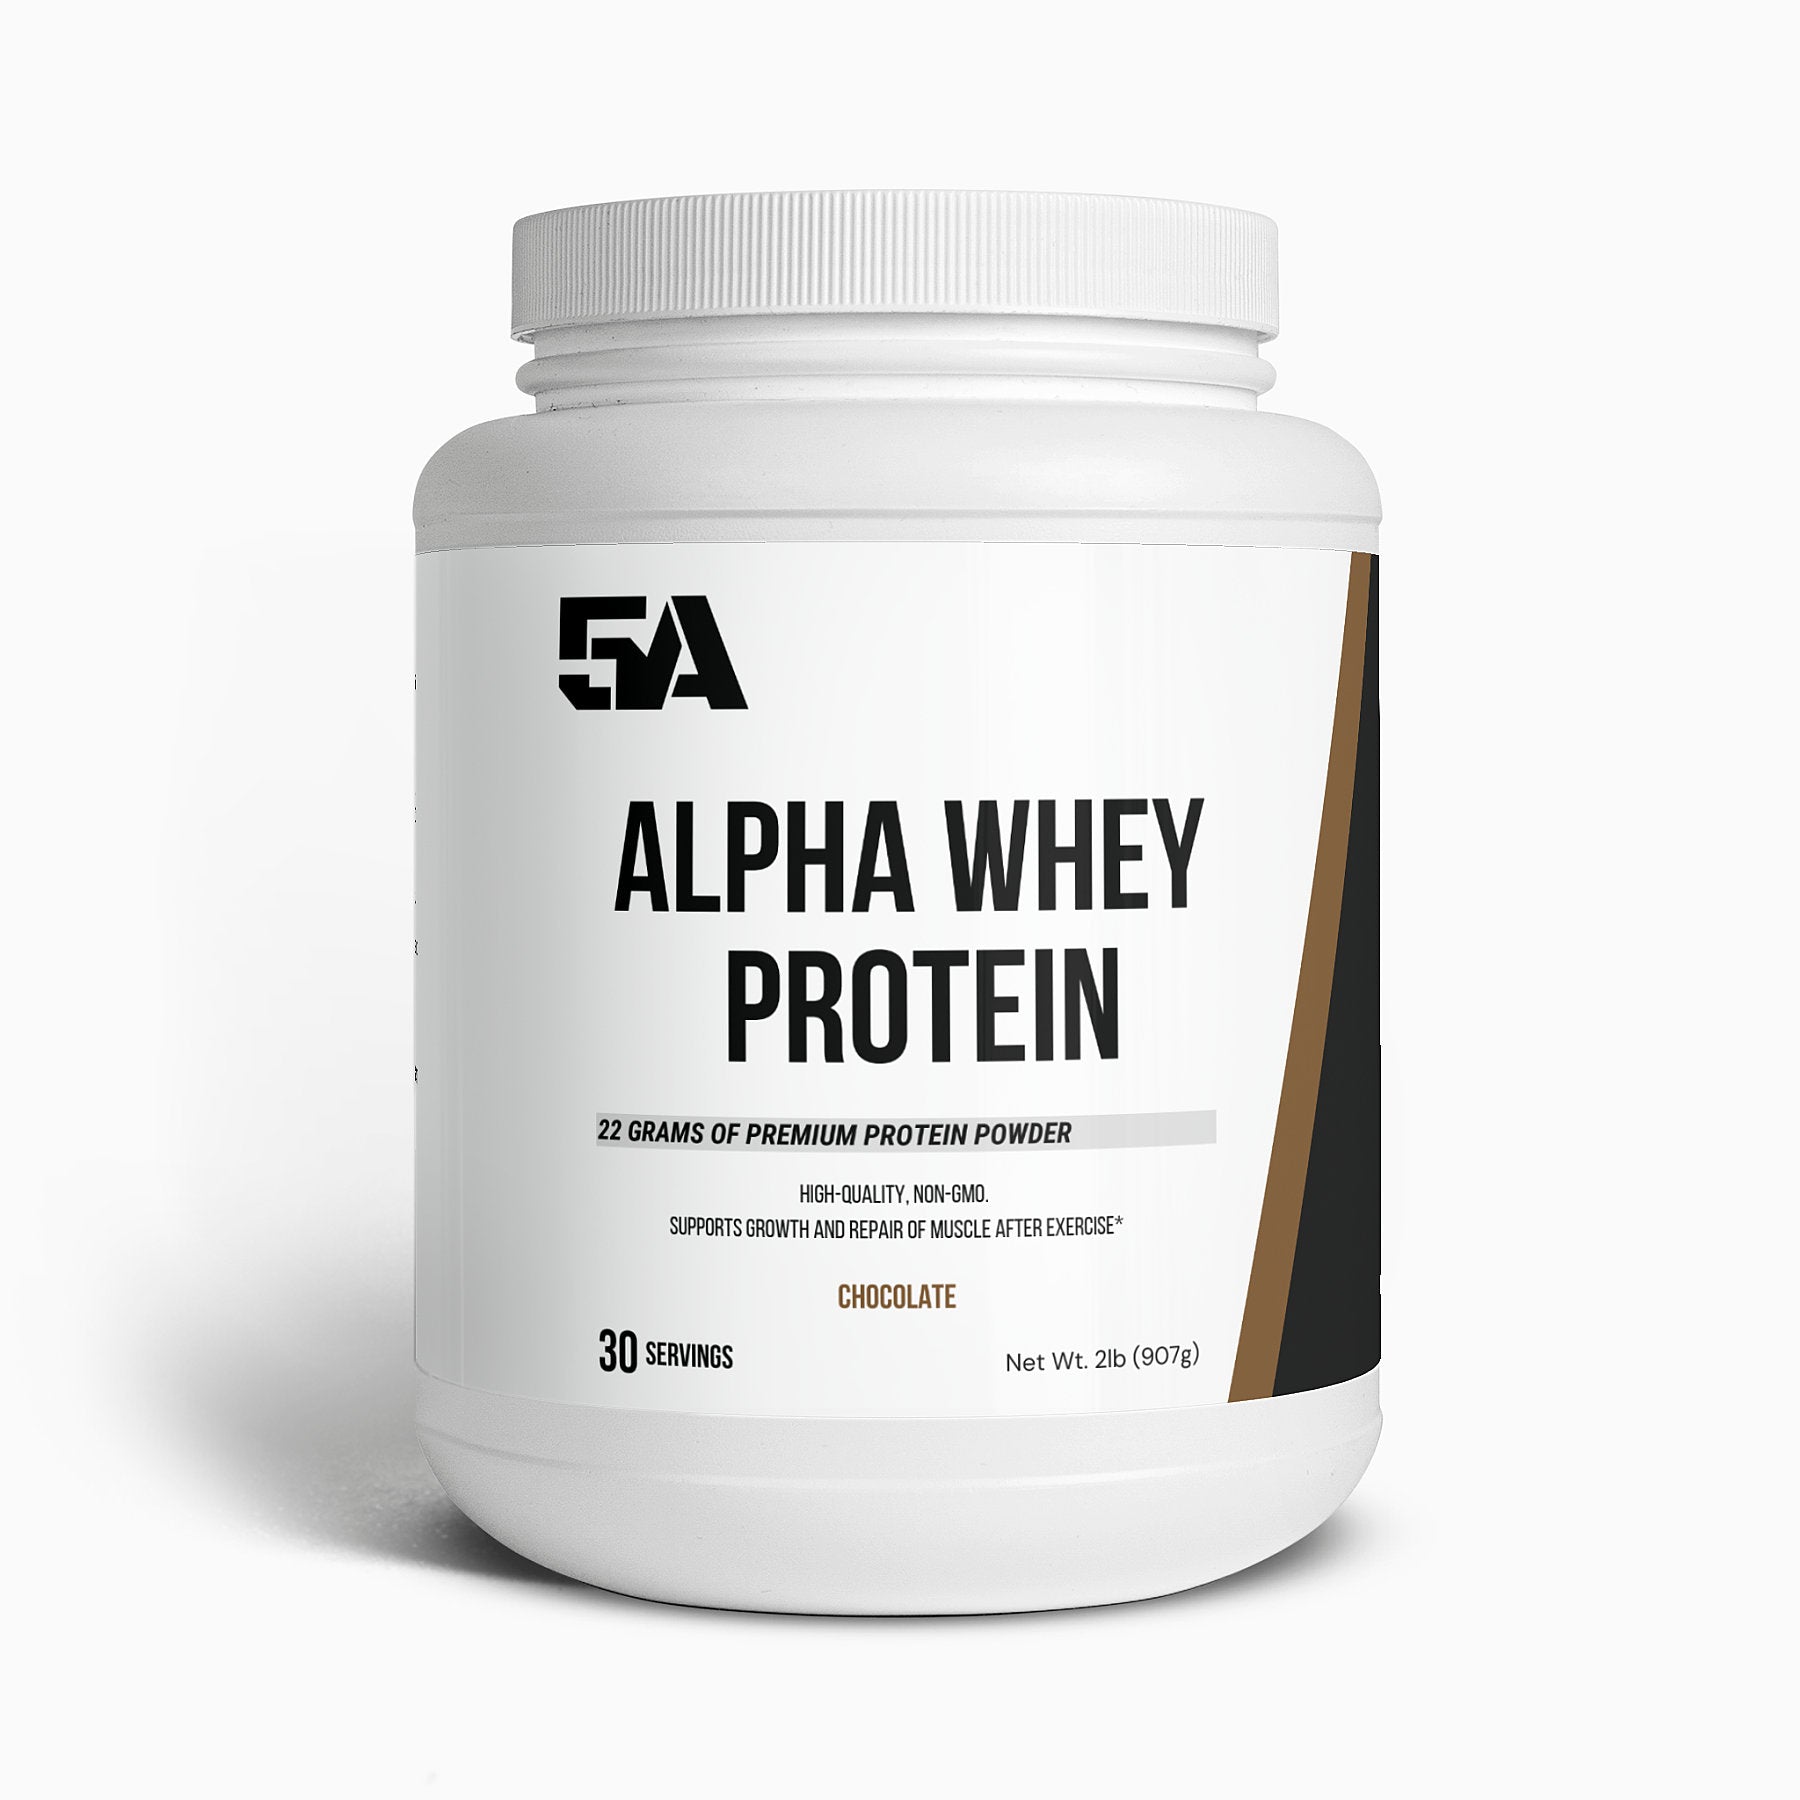 ALPHA Whey Protein